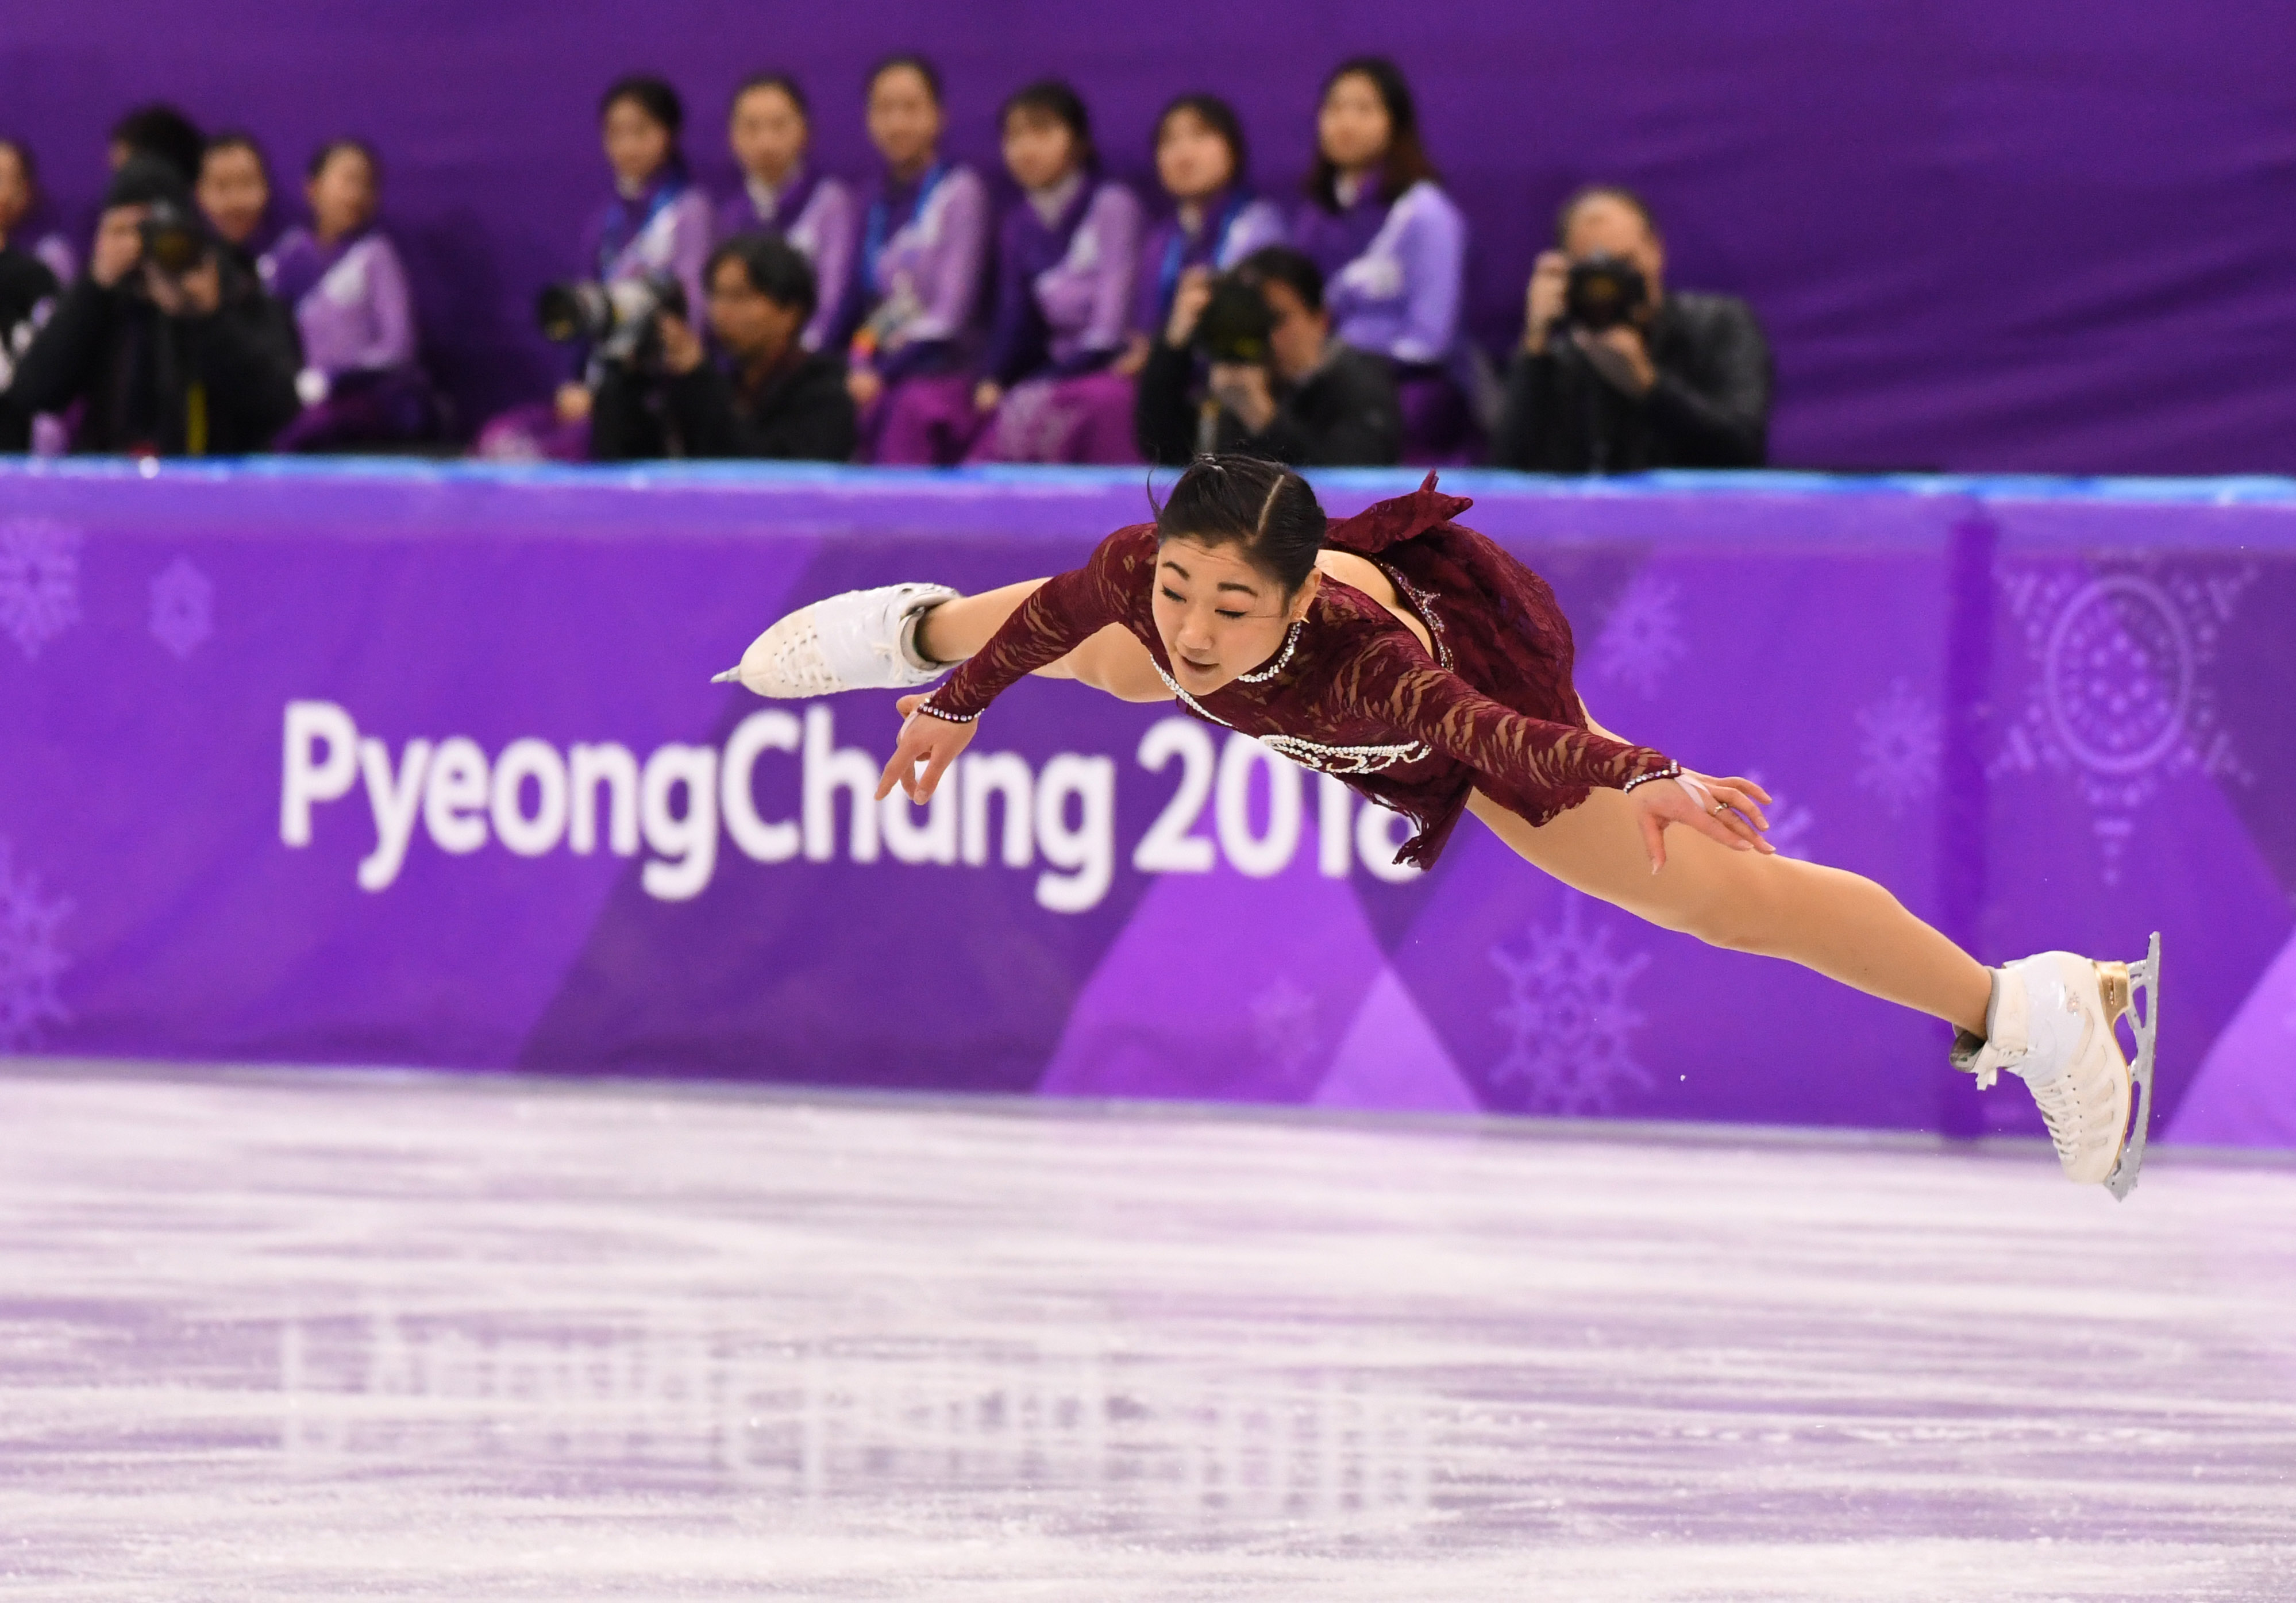 Mirai Nagasu, once an Avs’ ‘Ice Girl’ to make ends meet, aims for history in PyeongChang